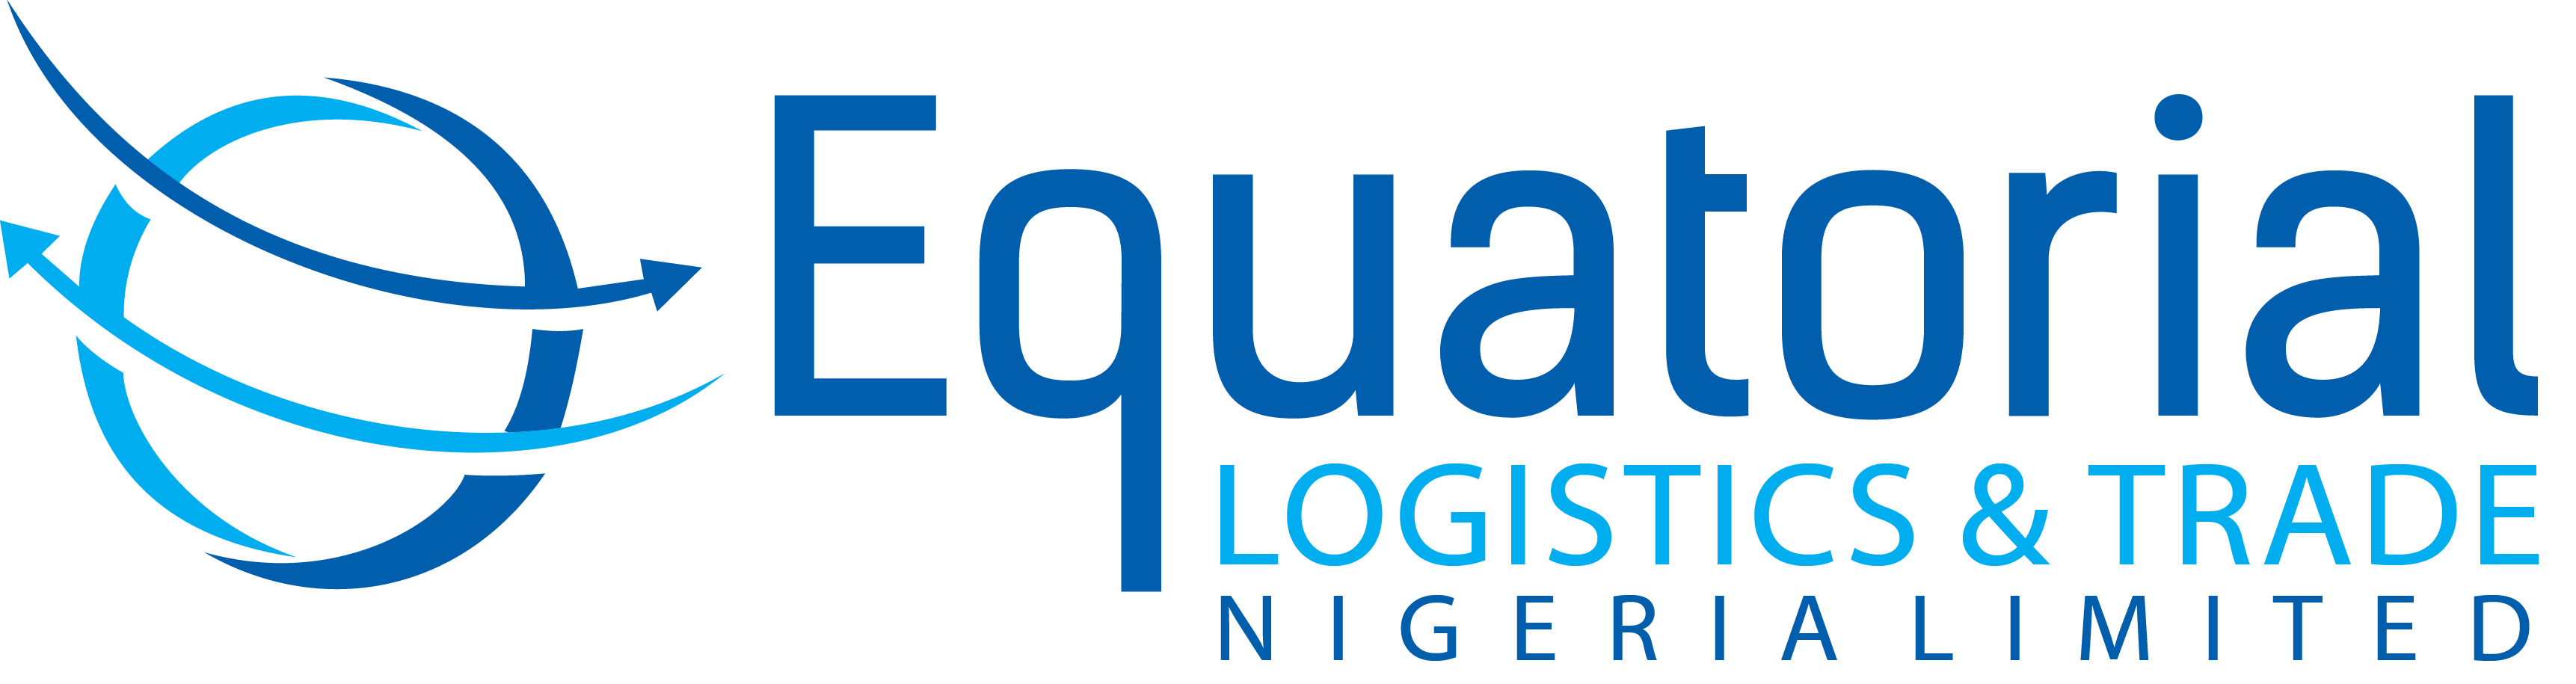 Equatorial Logistics